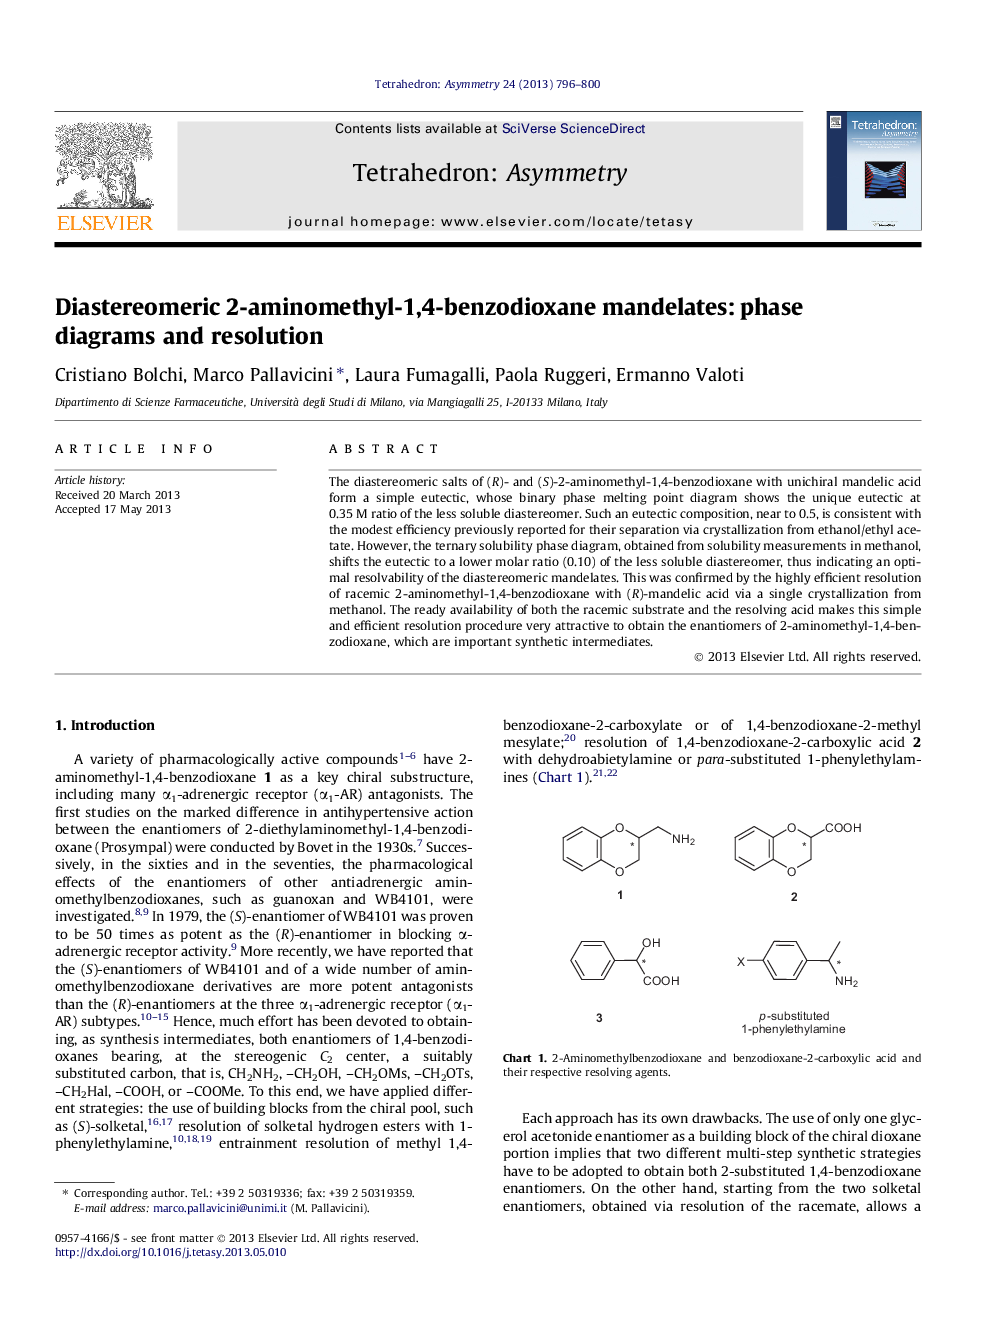 Diastereomeric 2-aminomethyl-1,4-benzodioxane mandelates: phase diagrams and resolution